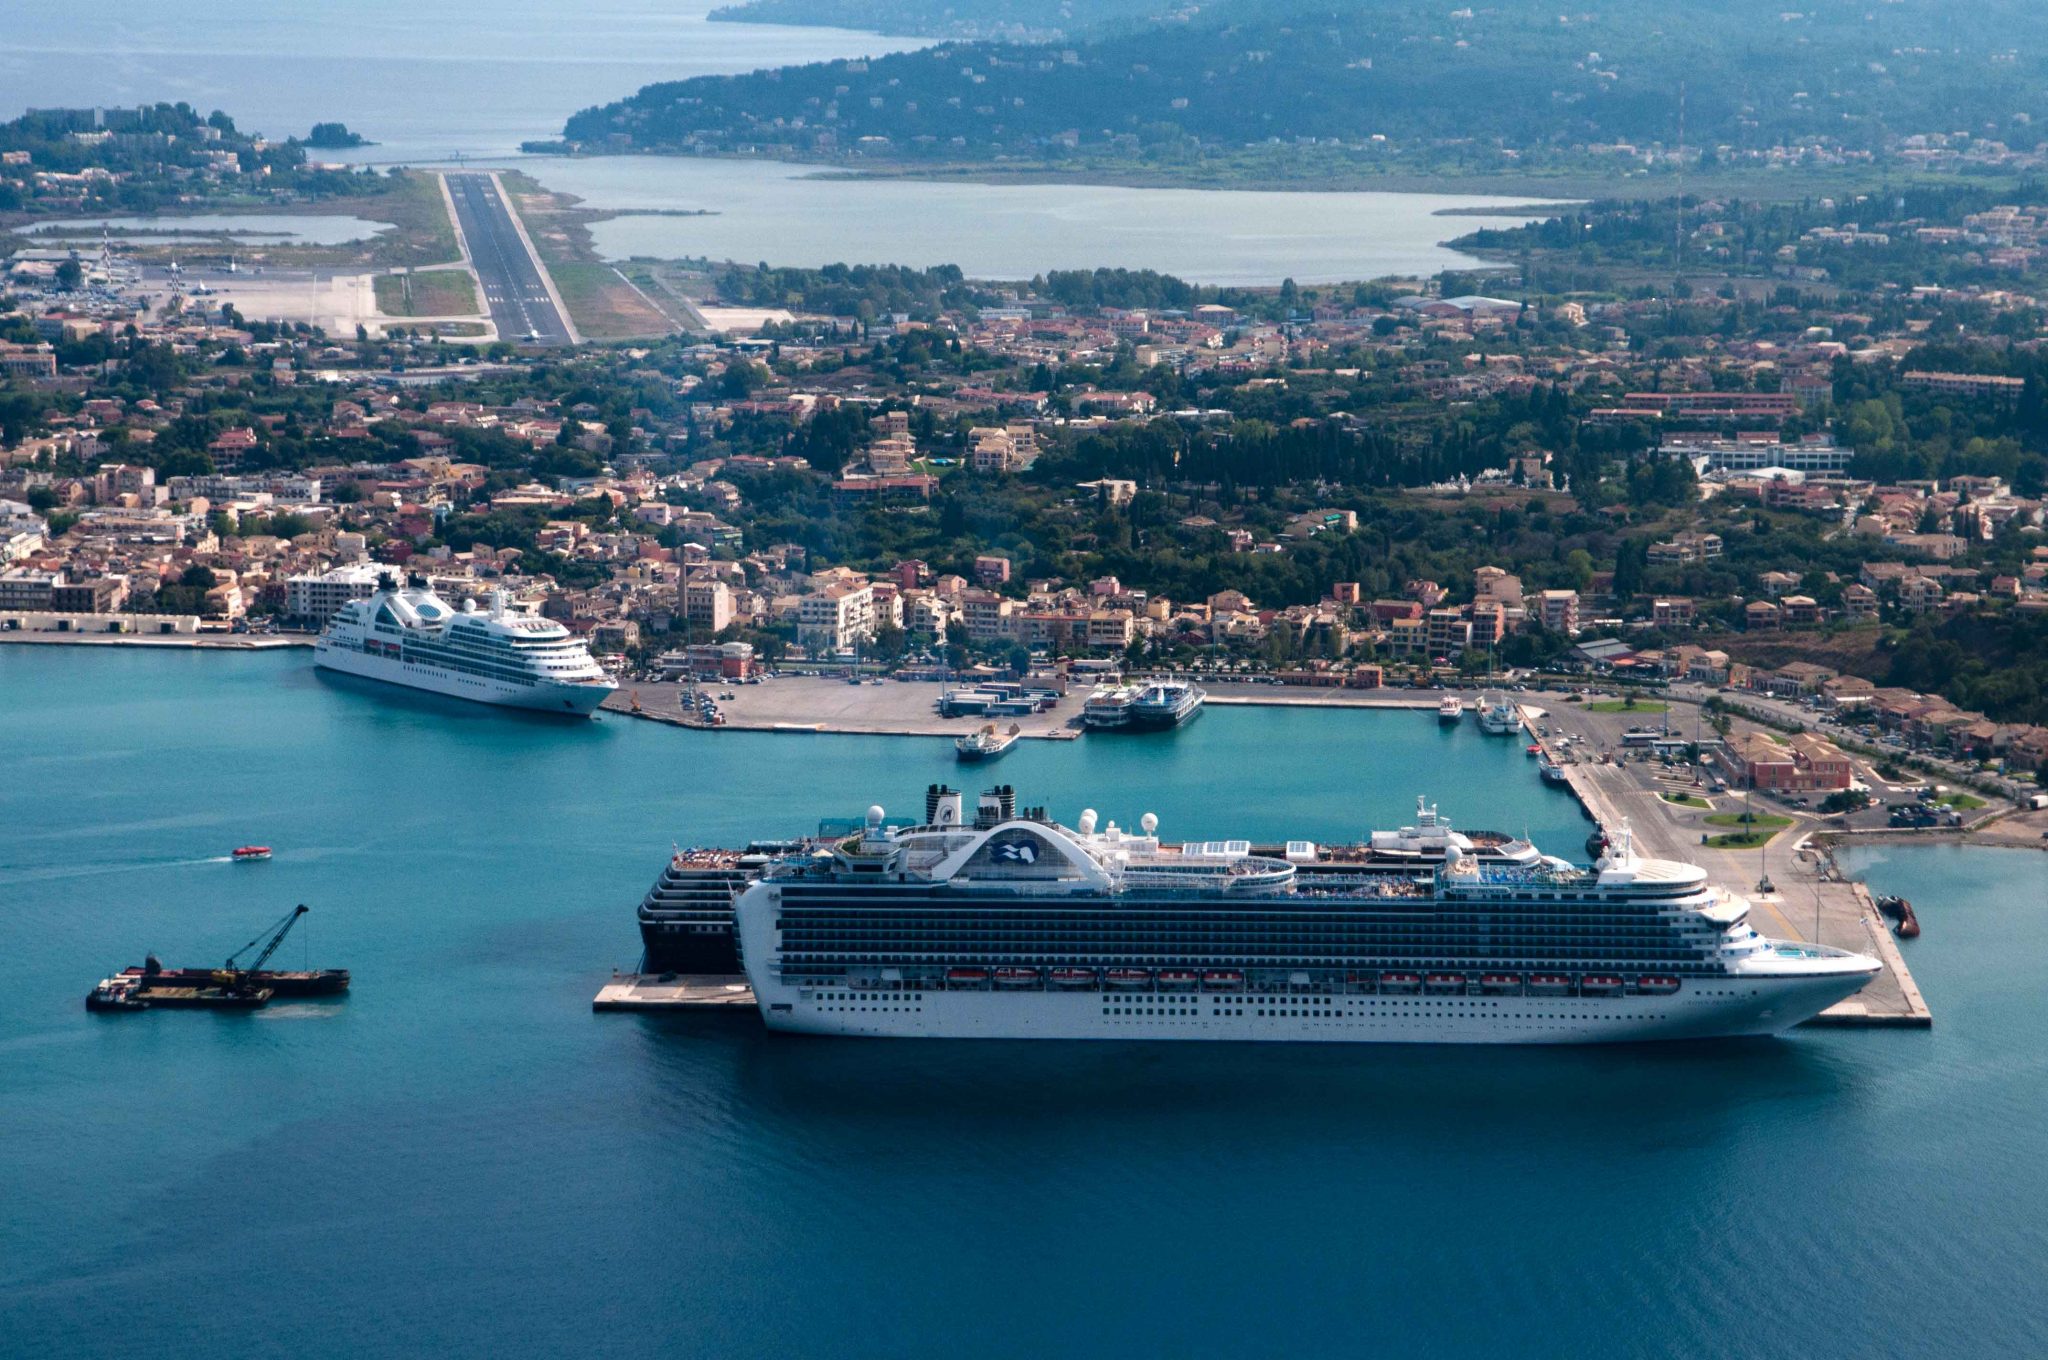 corfu cruise terminal webcam